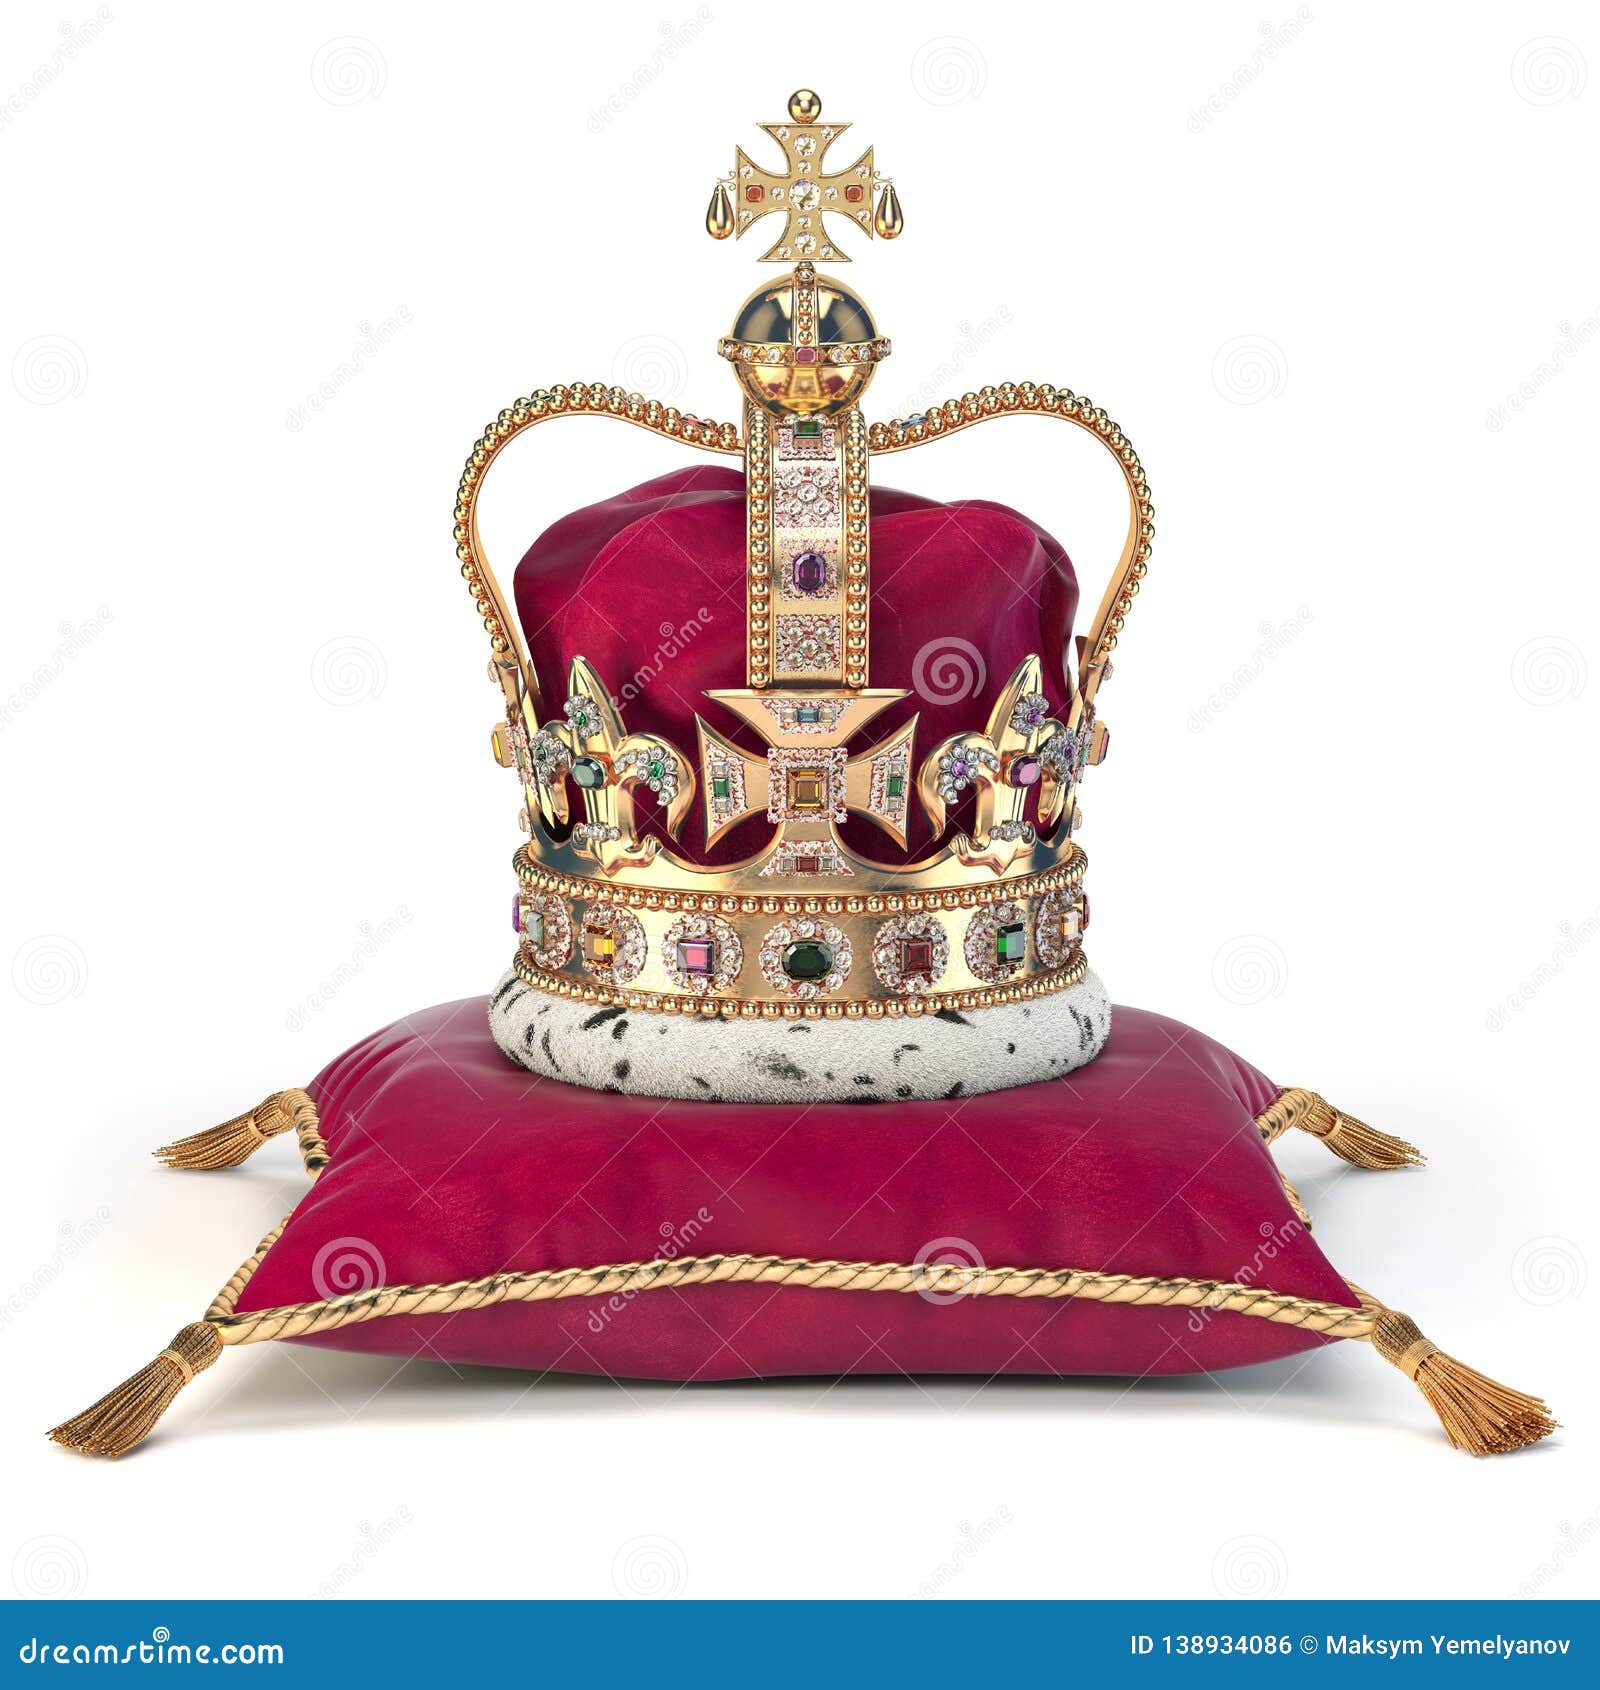 golden crown on red velvet pillow for coronation. royal  of british uk monarchy